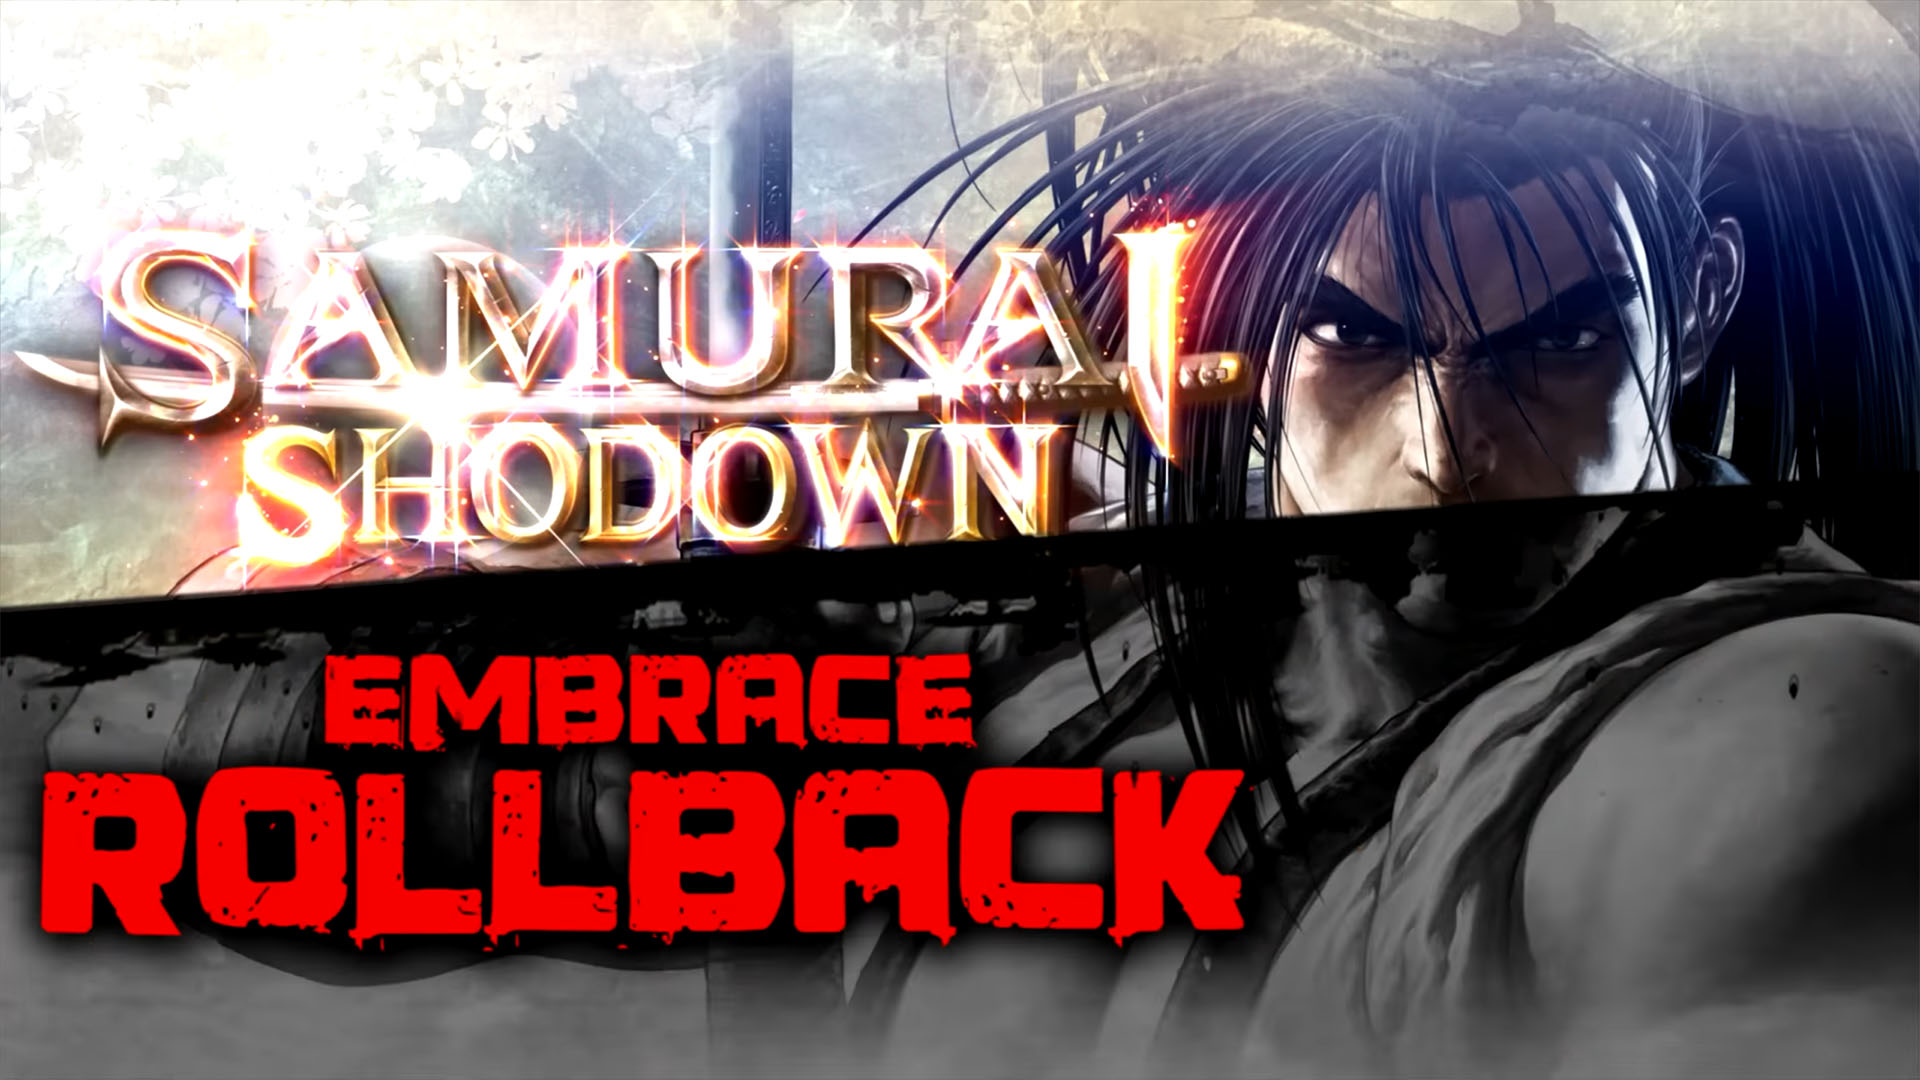 Samurai Shodown rollback netcode beta launches in January 2023 for PC